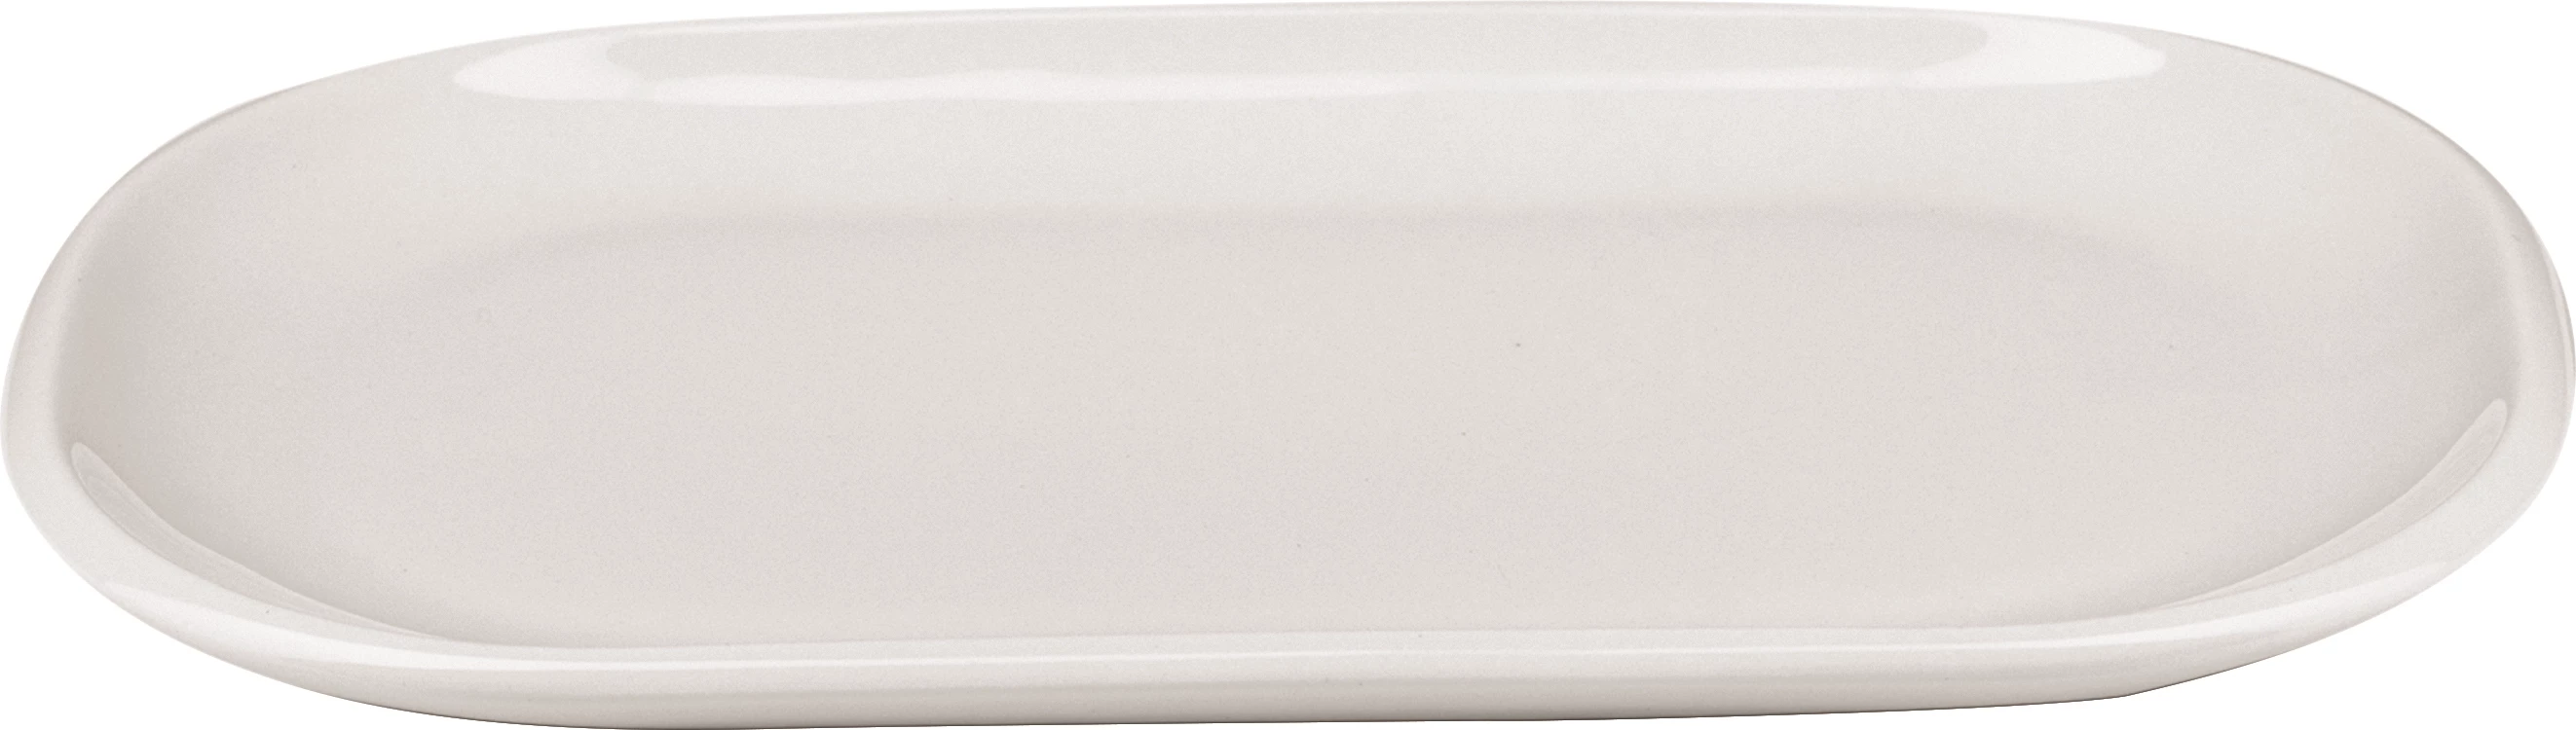 Figgjo Pax tallerken, oval, hvid, 20 x 13 cm